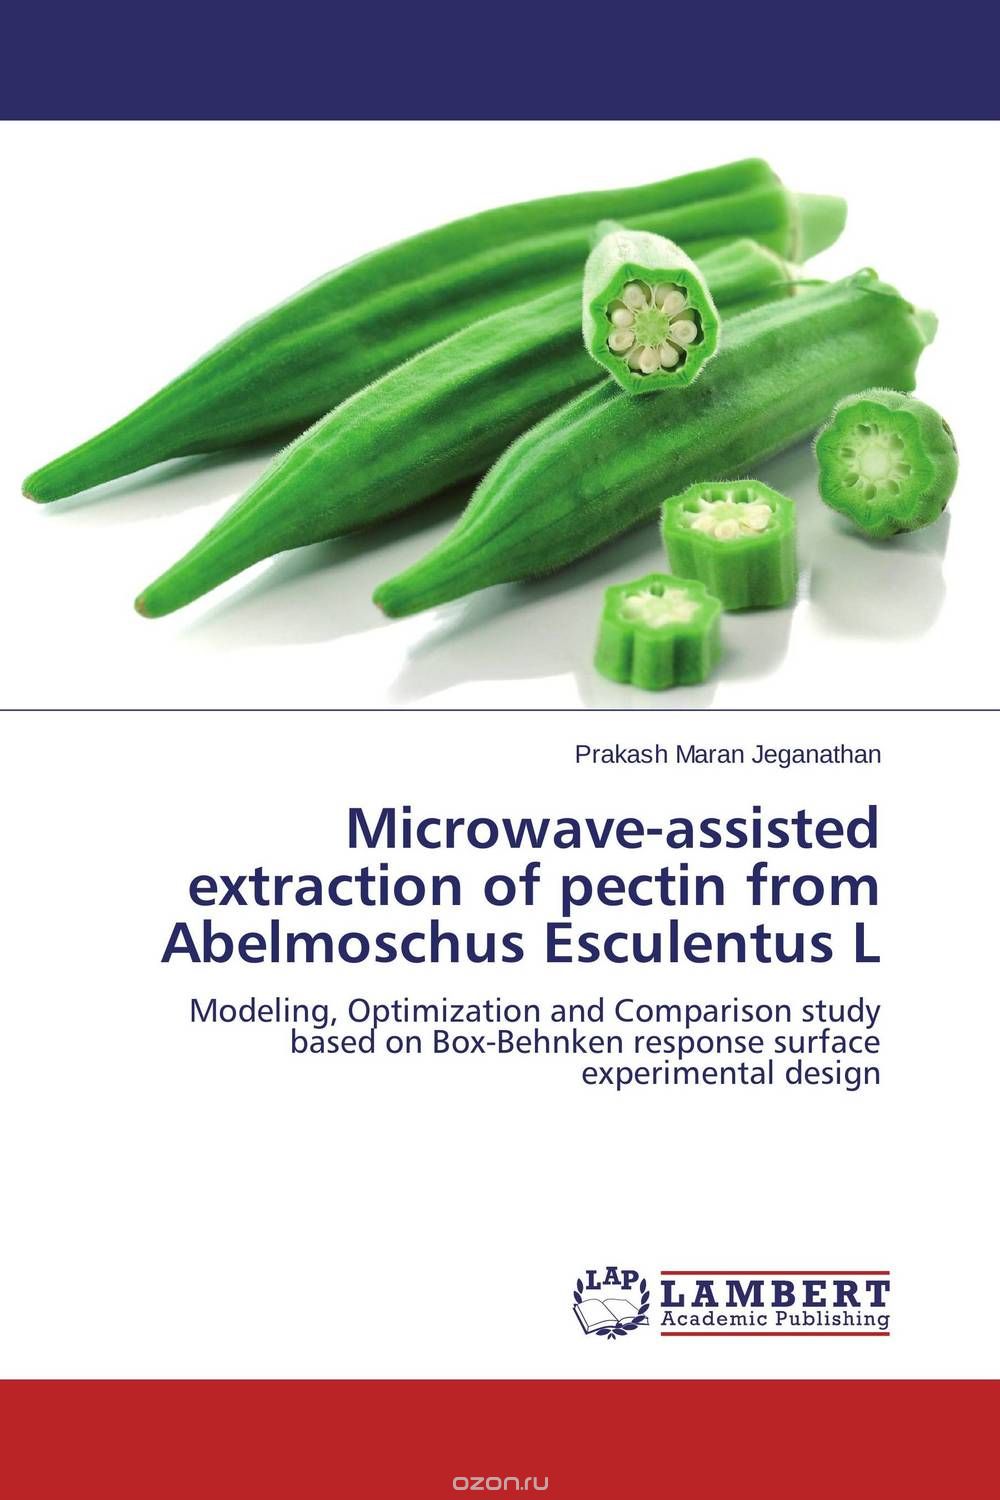 Скачать книгу "Microwave-assisted extraction of pectin from Abelmoschus Esculentus L"